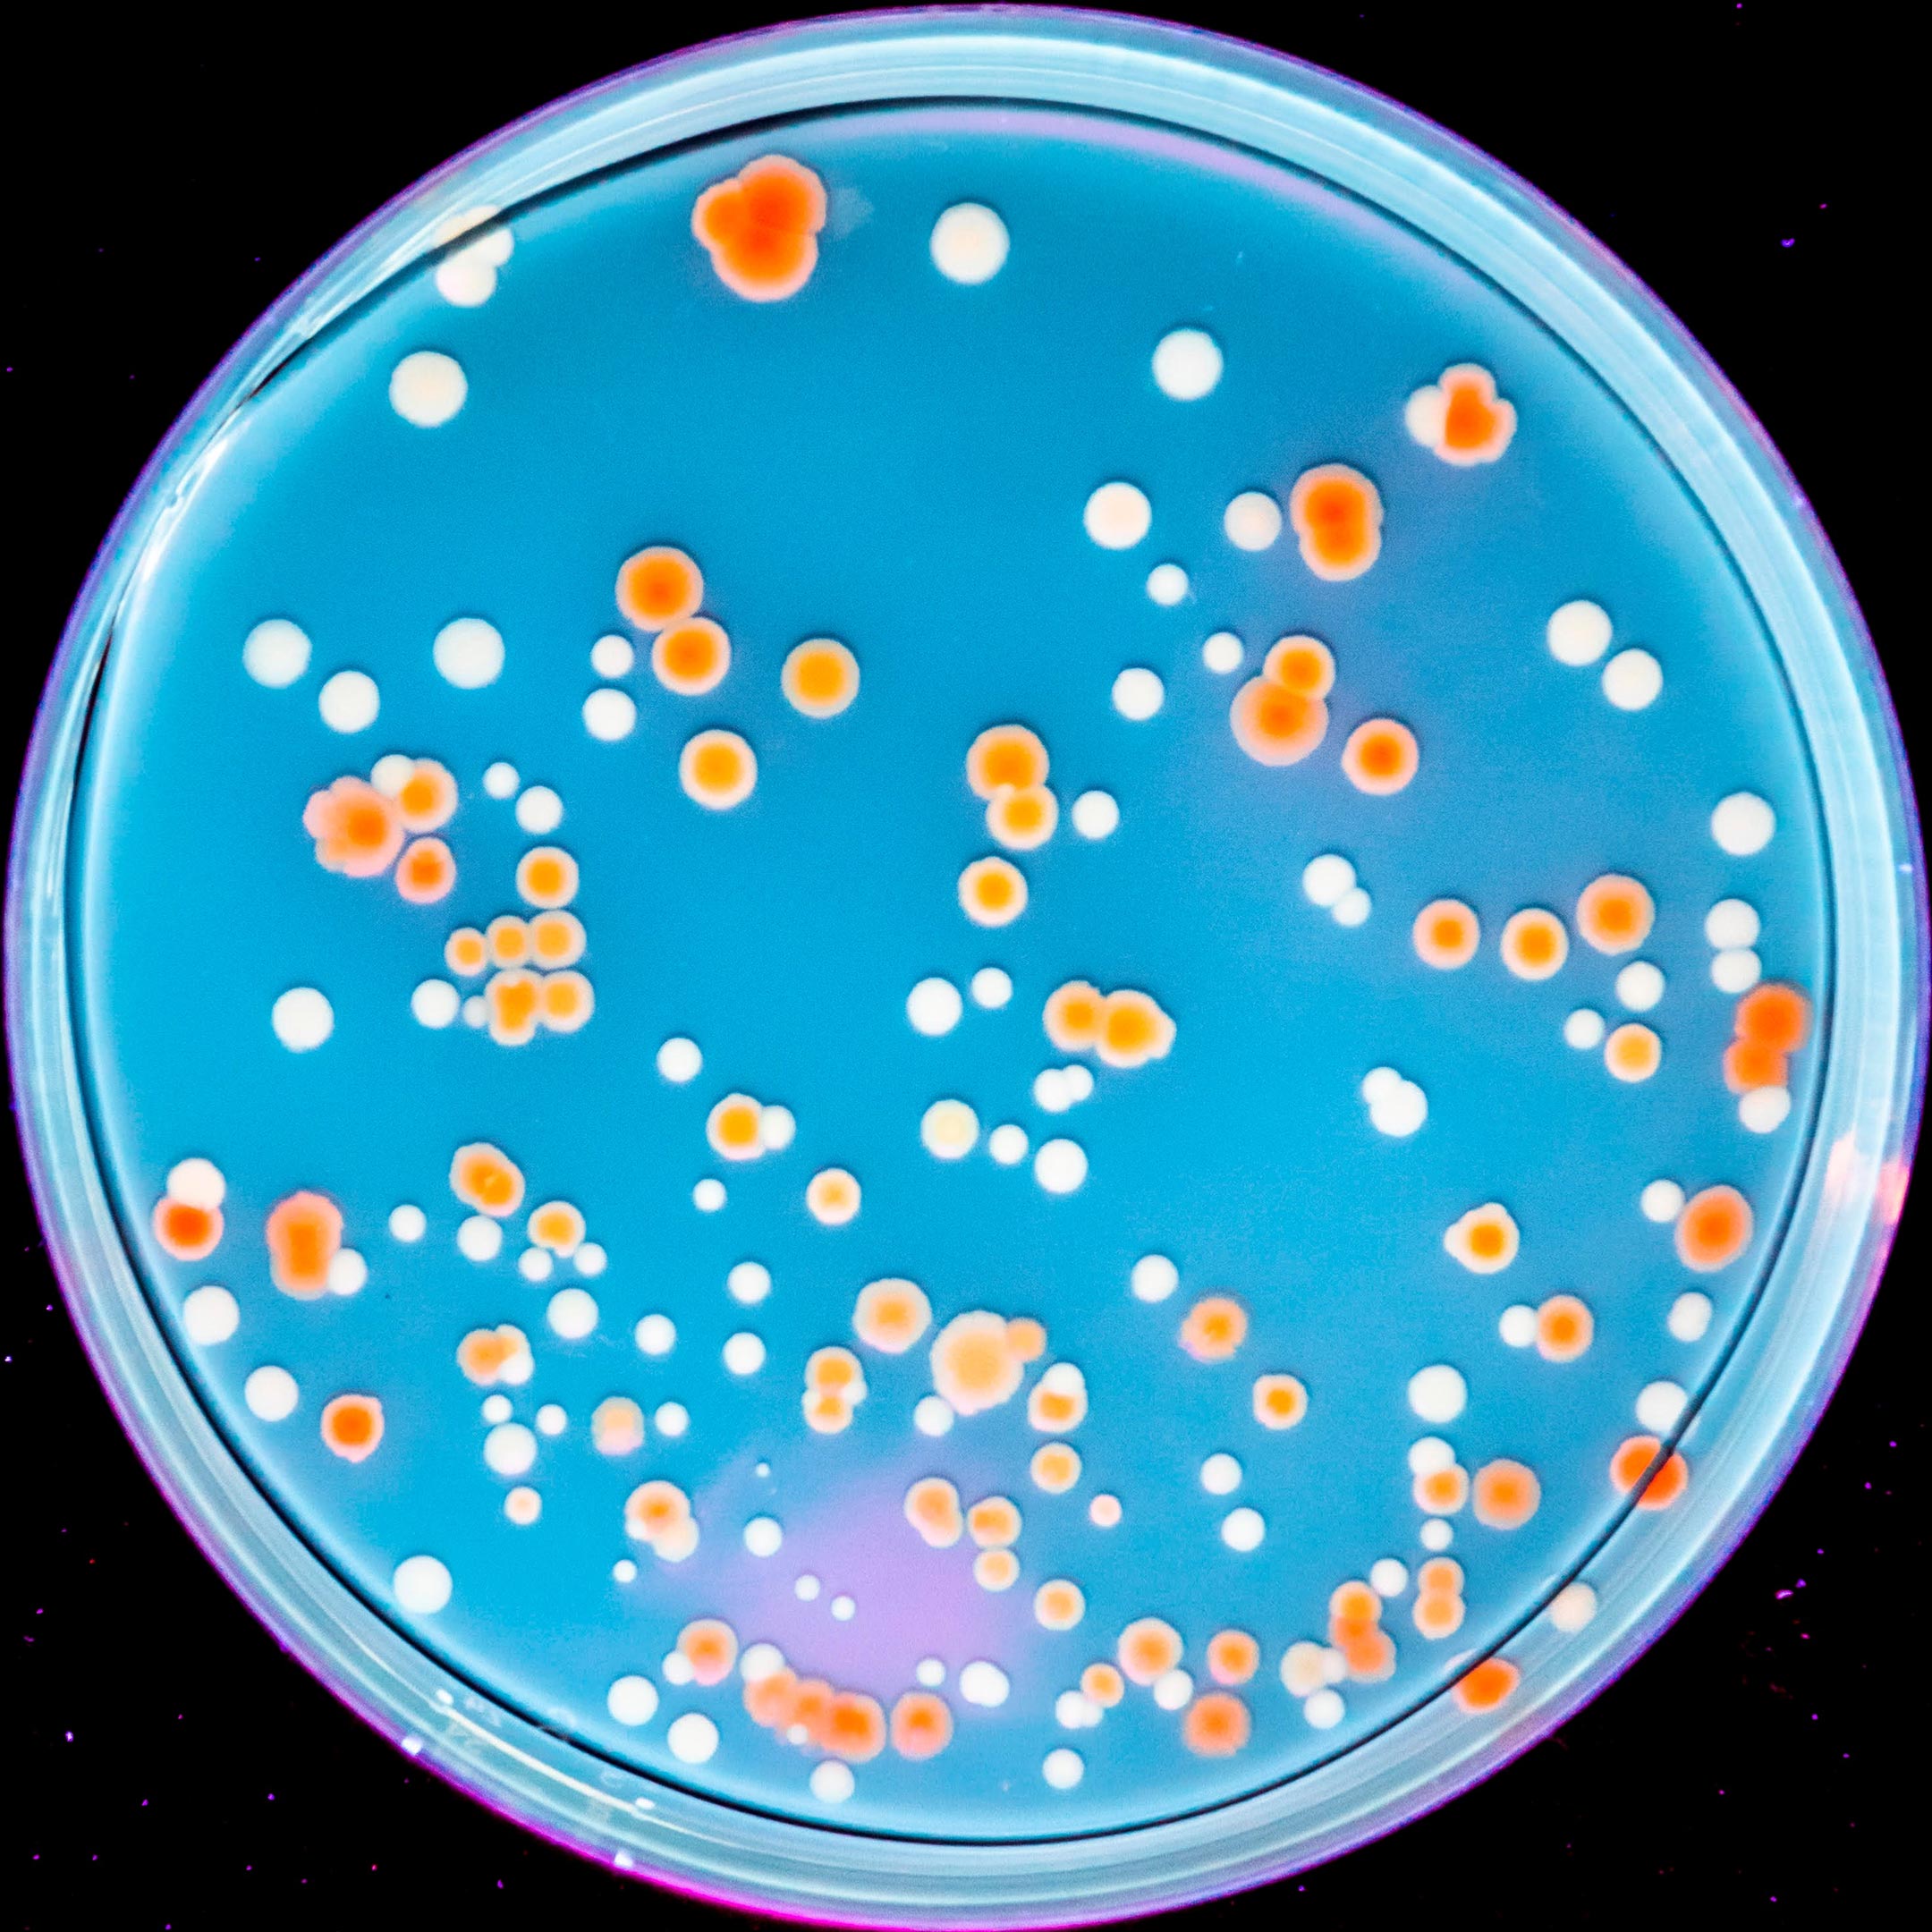 Extremophile organisms: Deinococcus radiodurans. Science blog 121